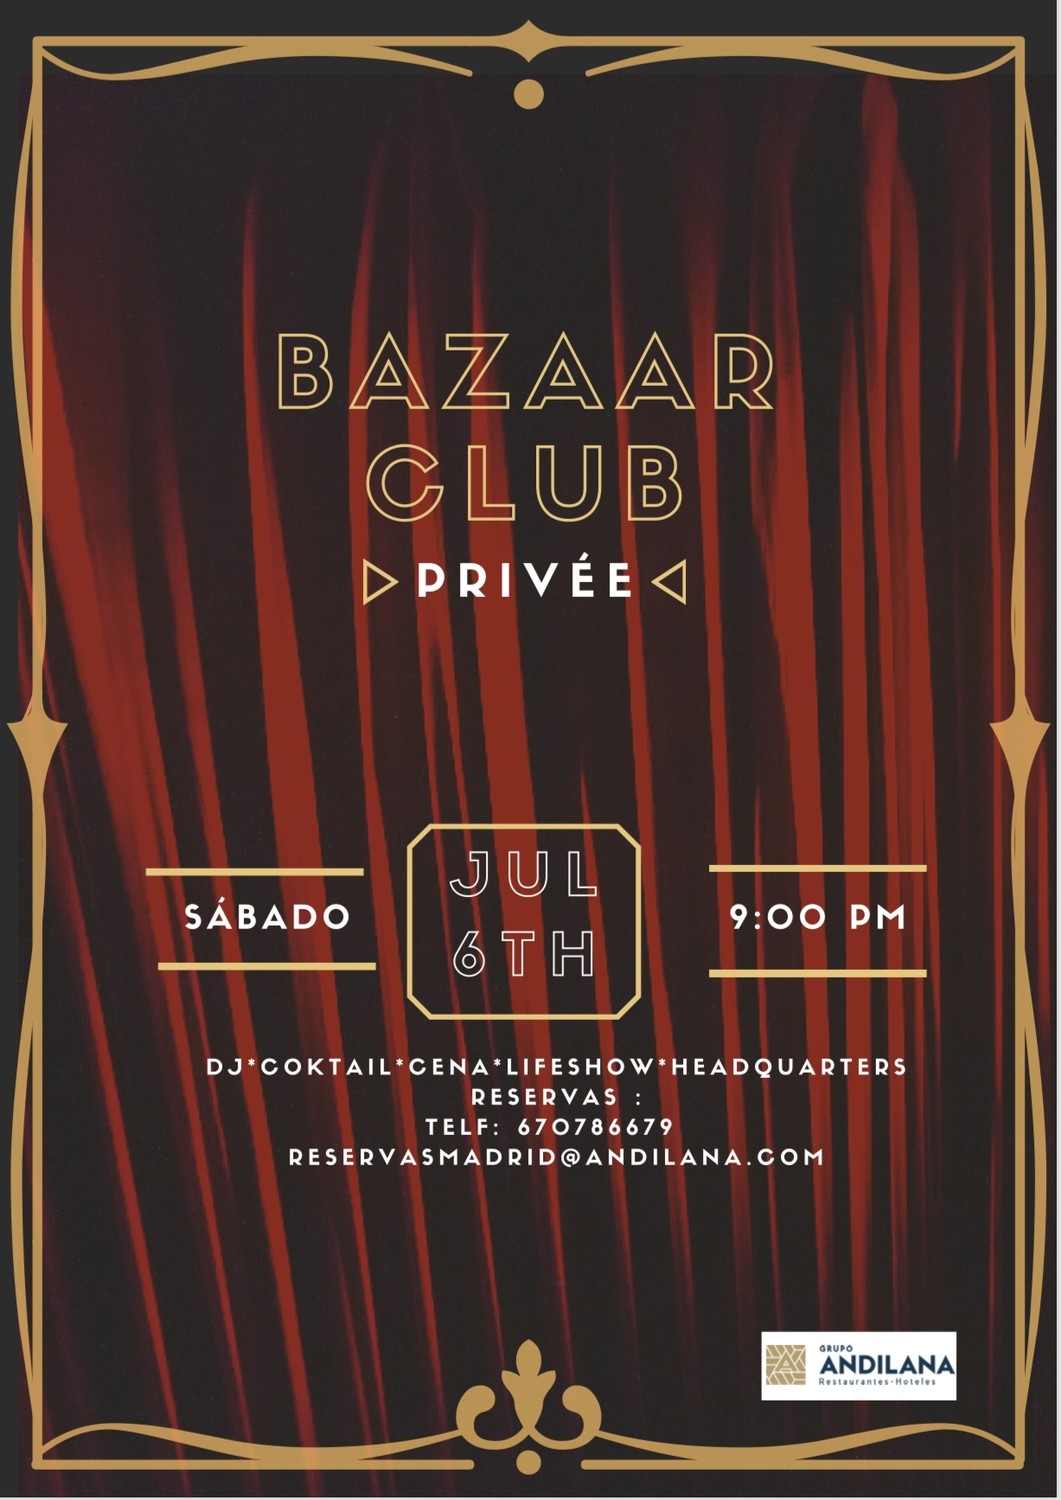 Ticket Bazaar club privée